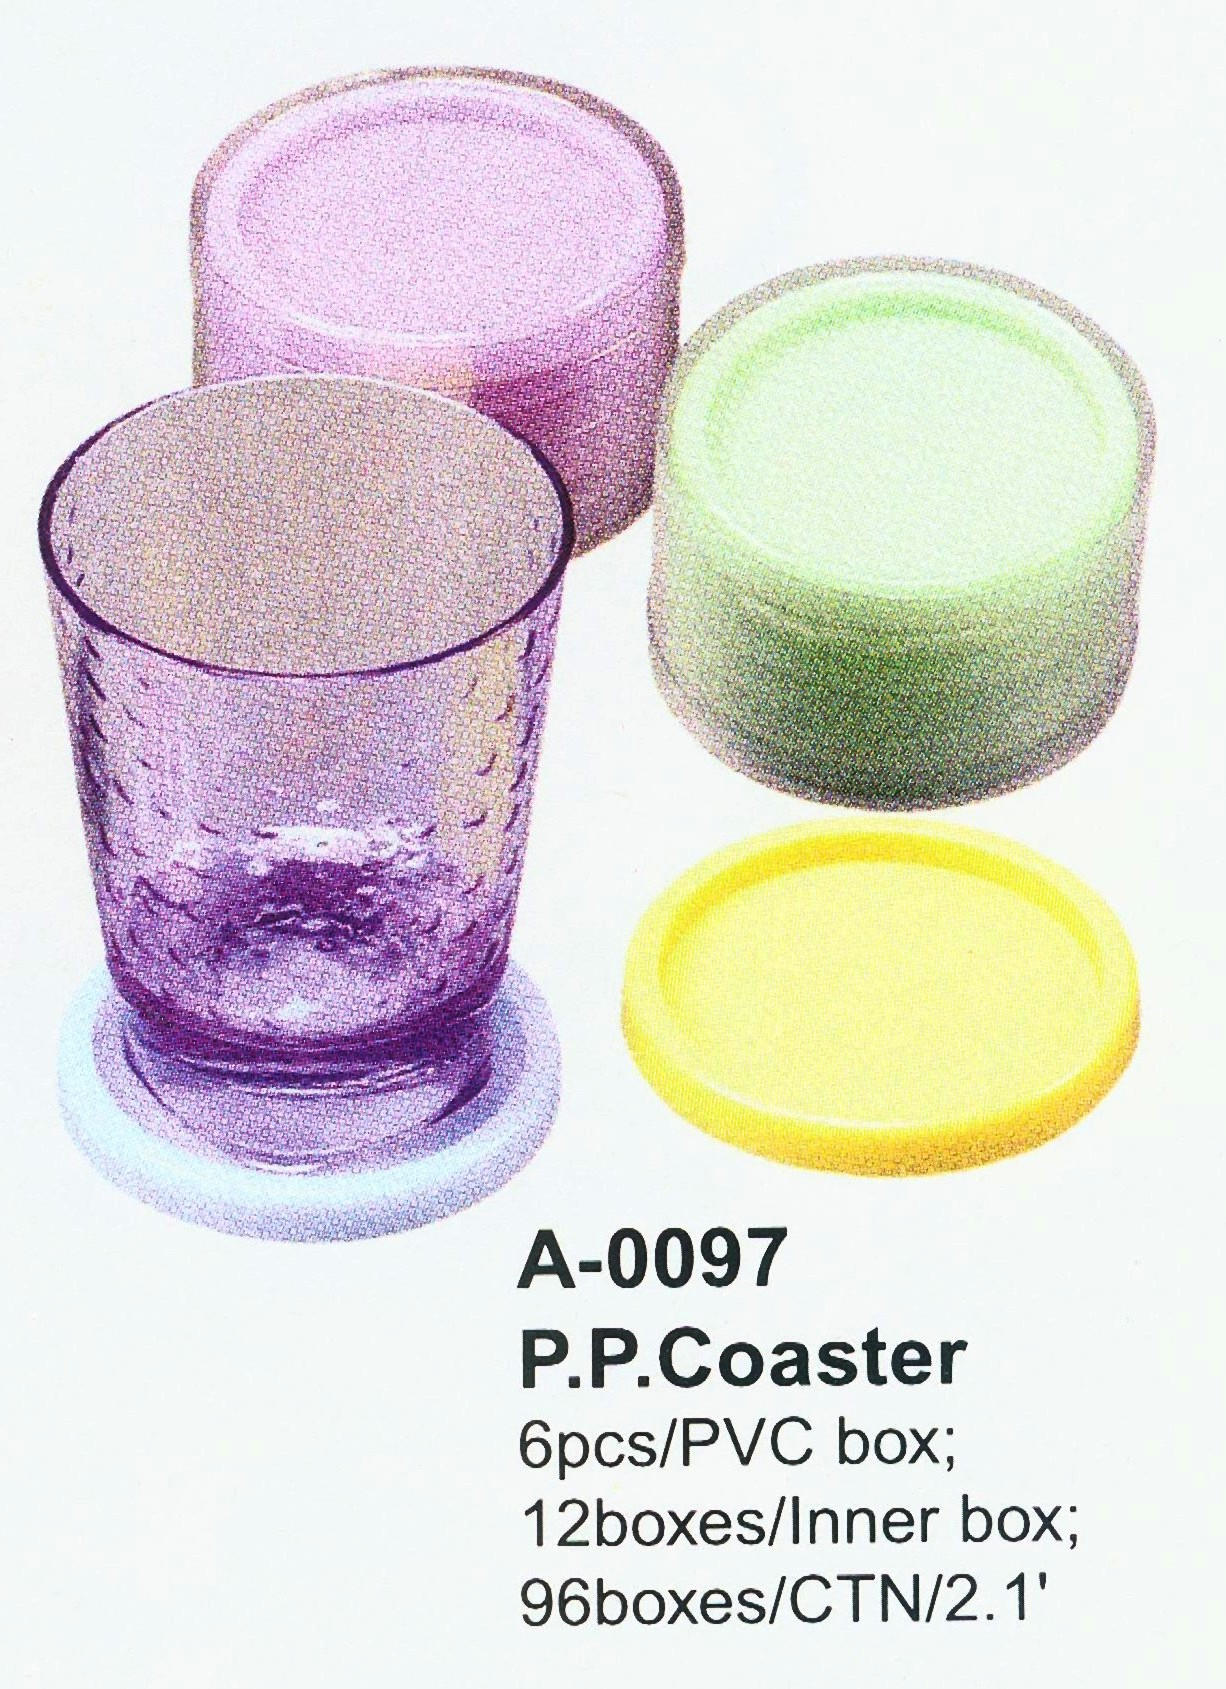 P.P. Coaster (P.p. Coaster)